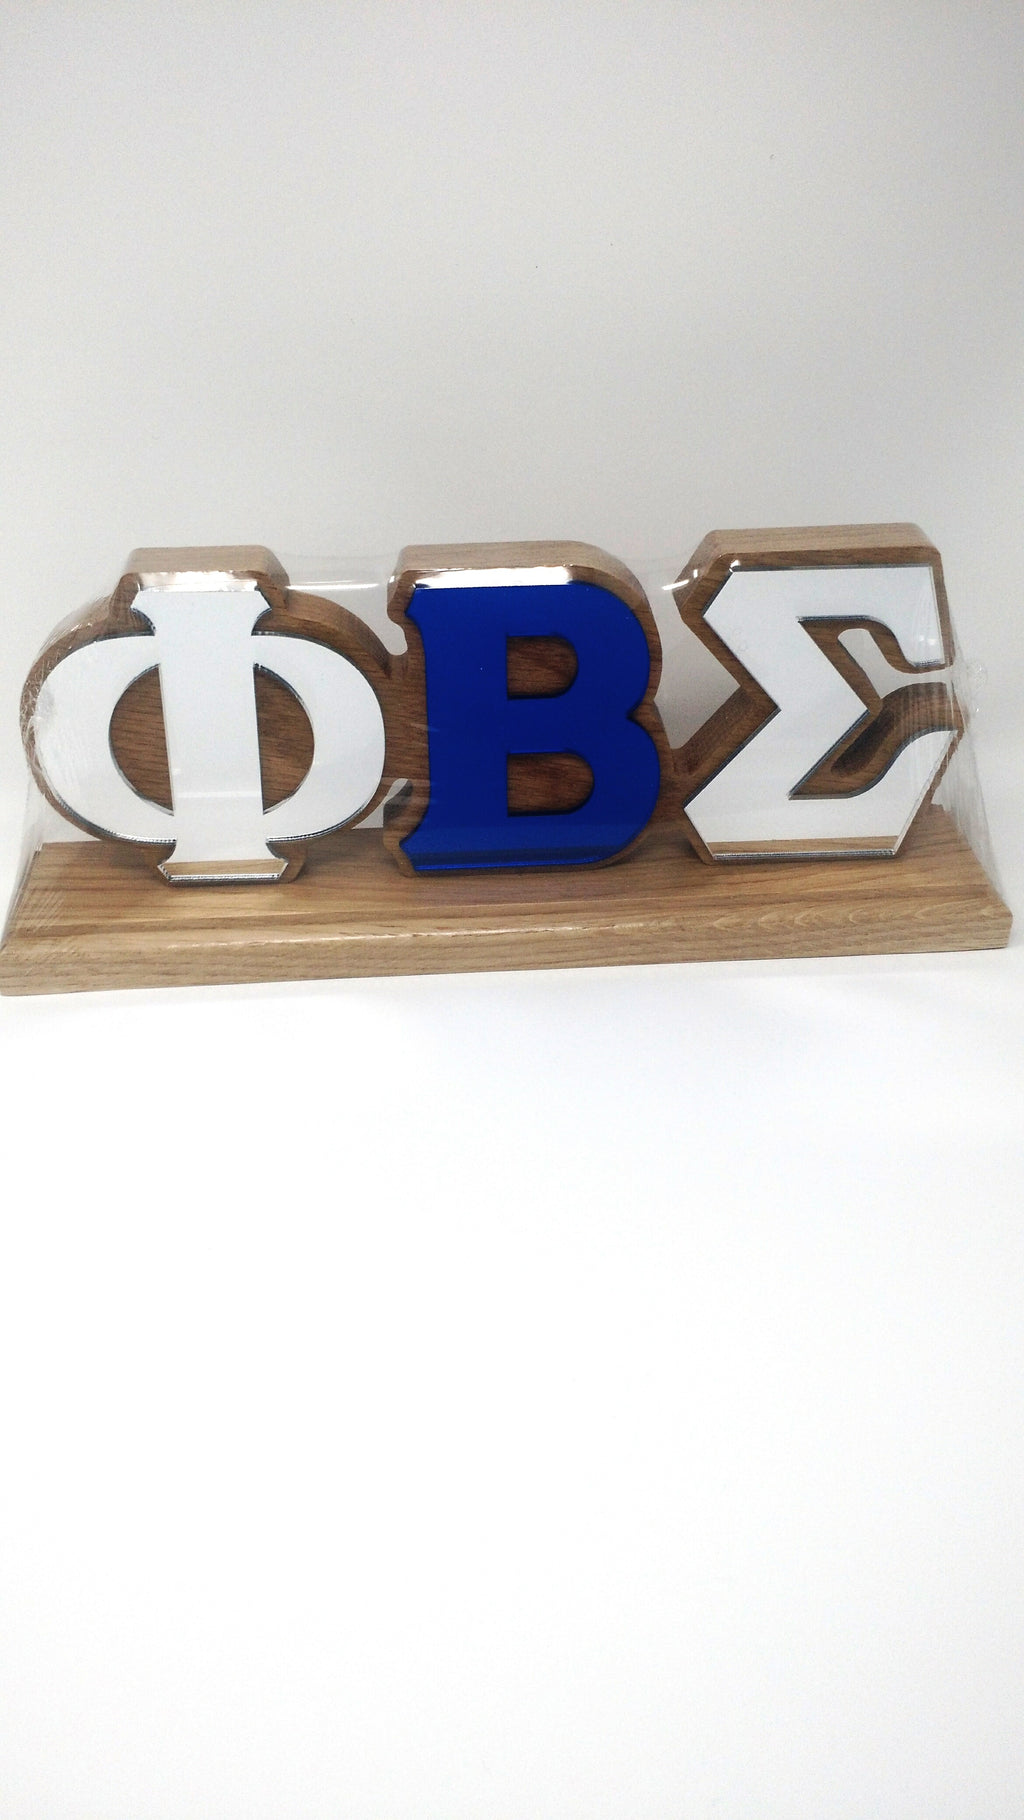 Phi Beta Sigma Wooden Desk Top Letters